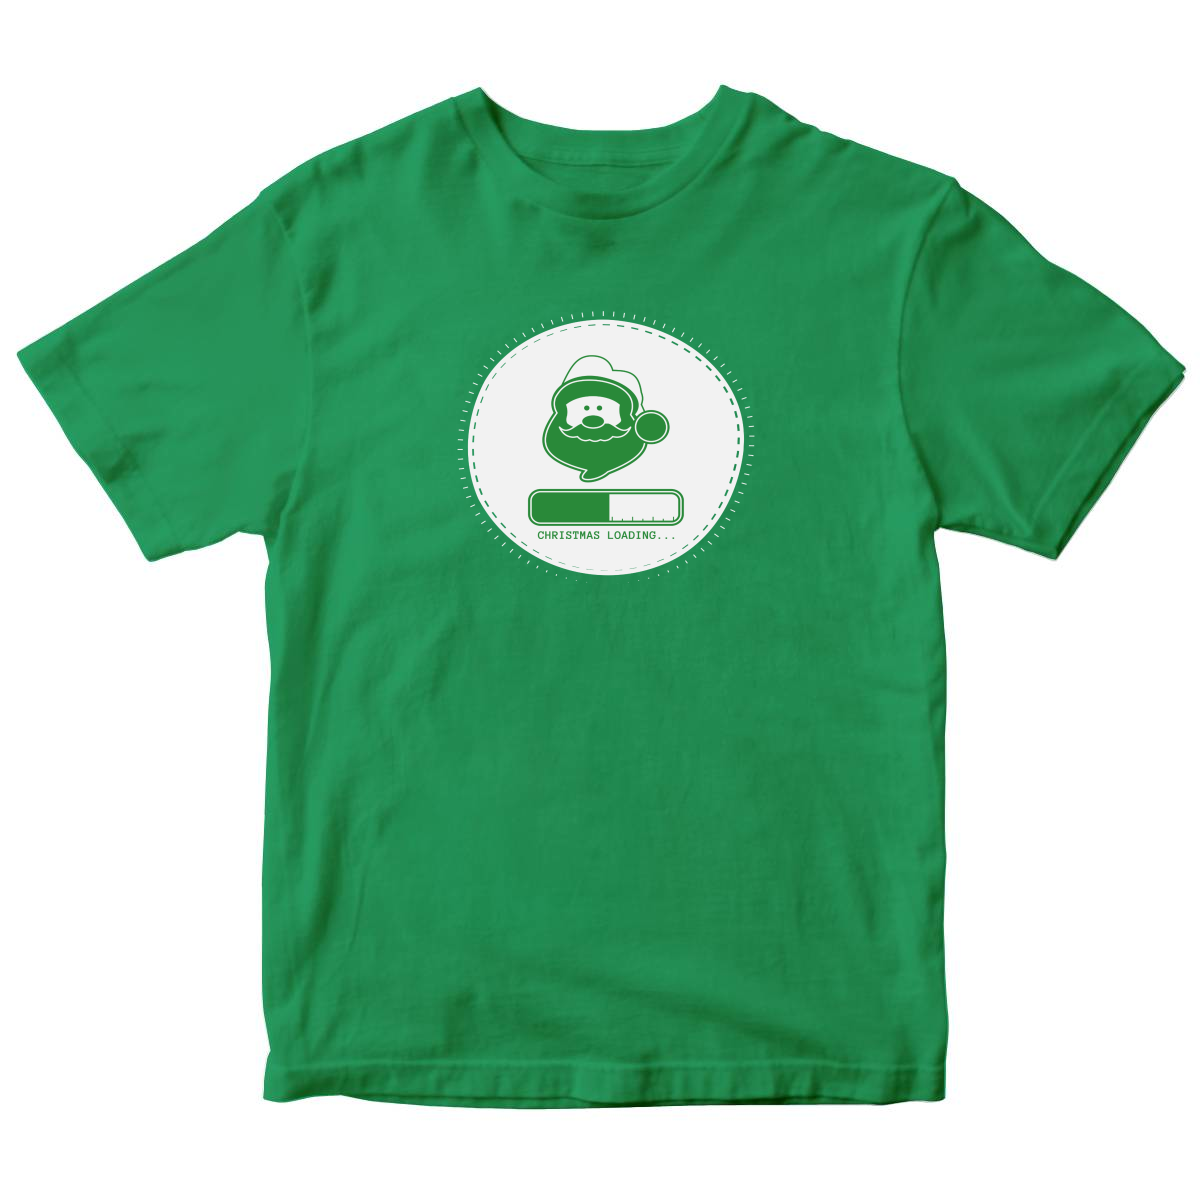 Christmas Loading Kids T-shirt | Green